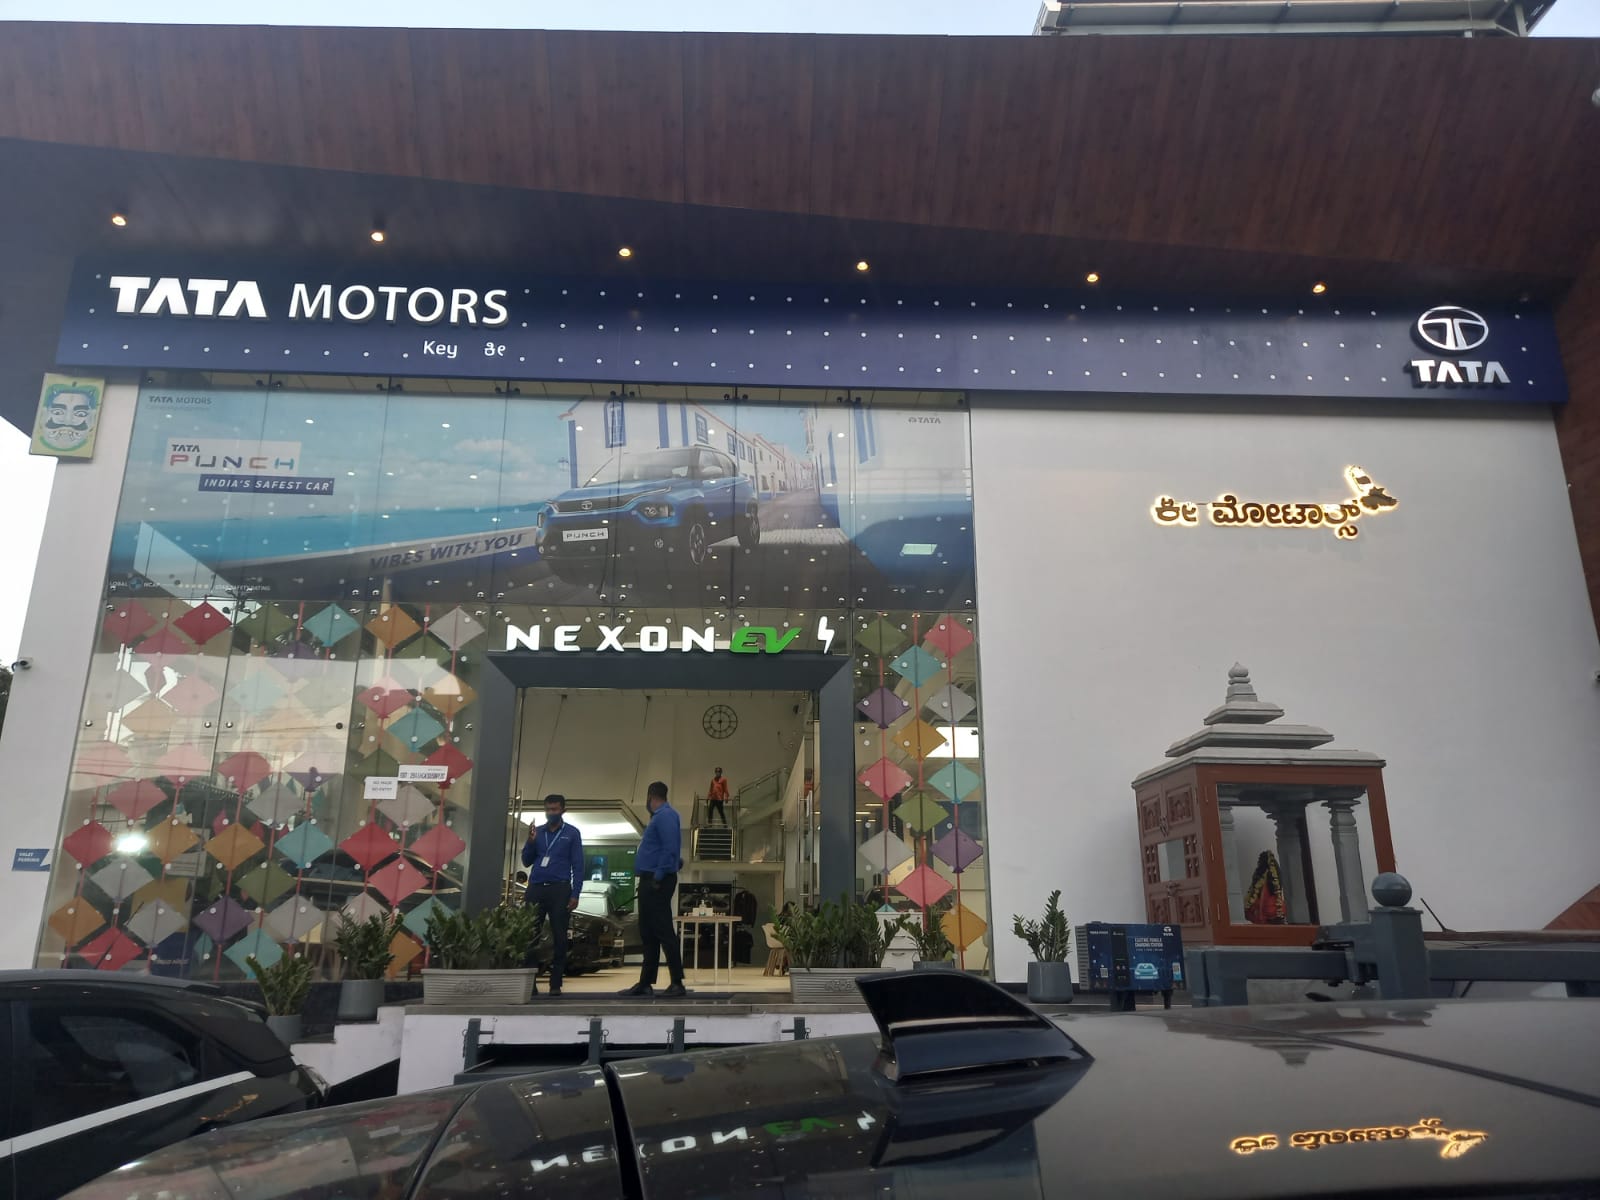 Tata Motors Showroom (Key Motors)